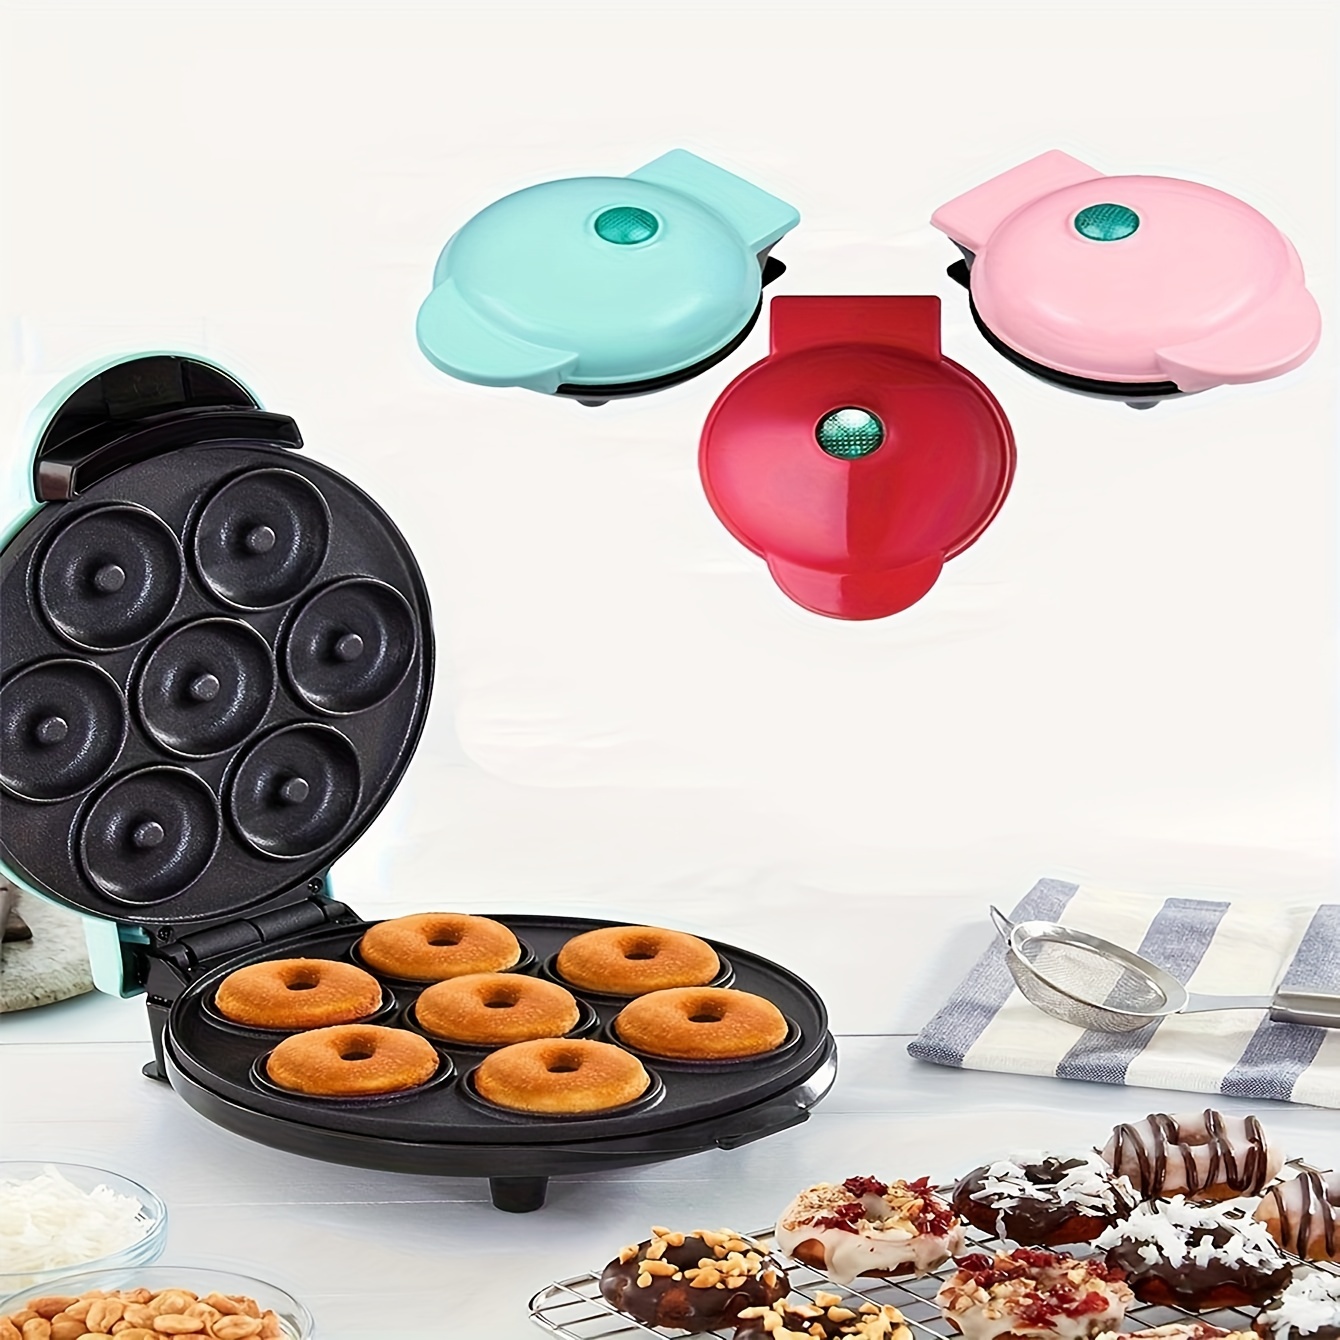 Maquina De Donas Elaboracion Mini Caseras Donut Maker